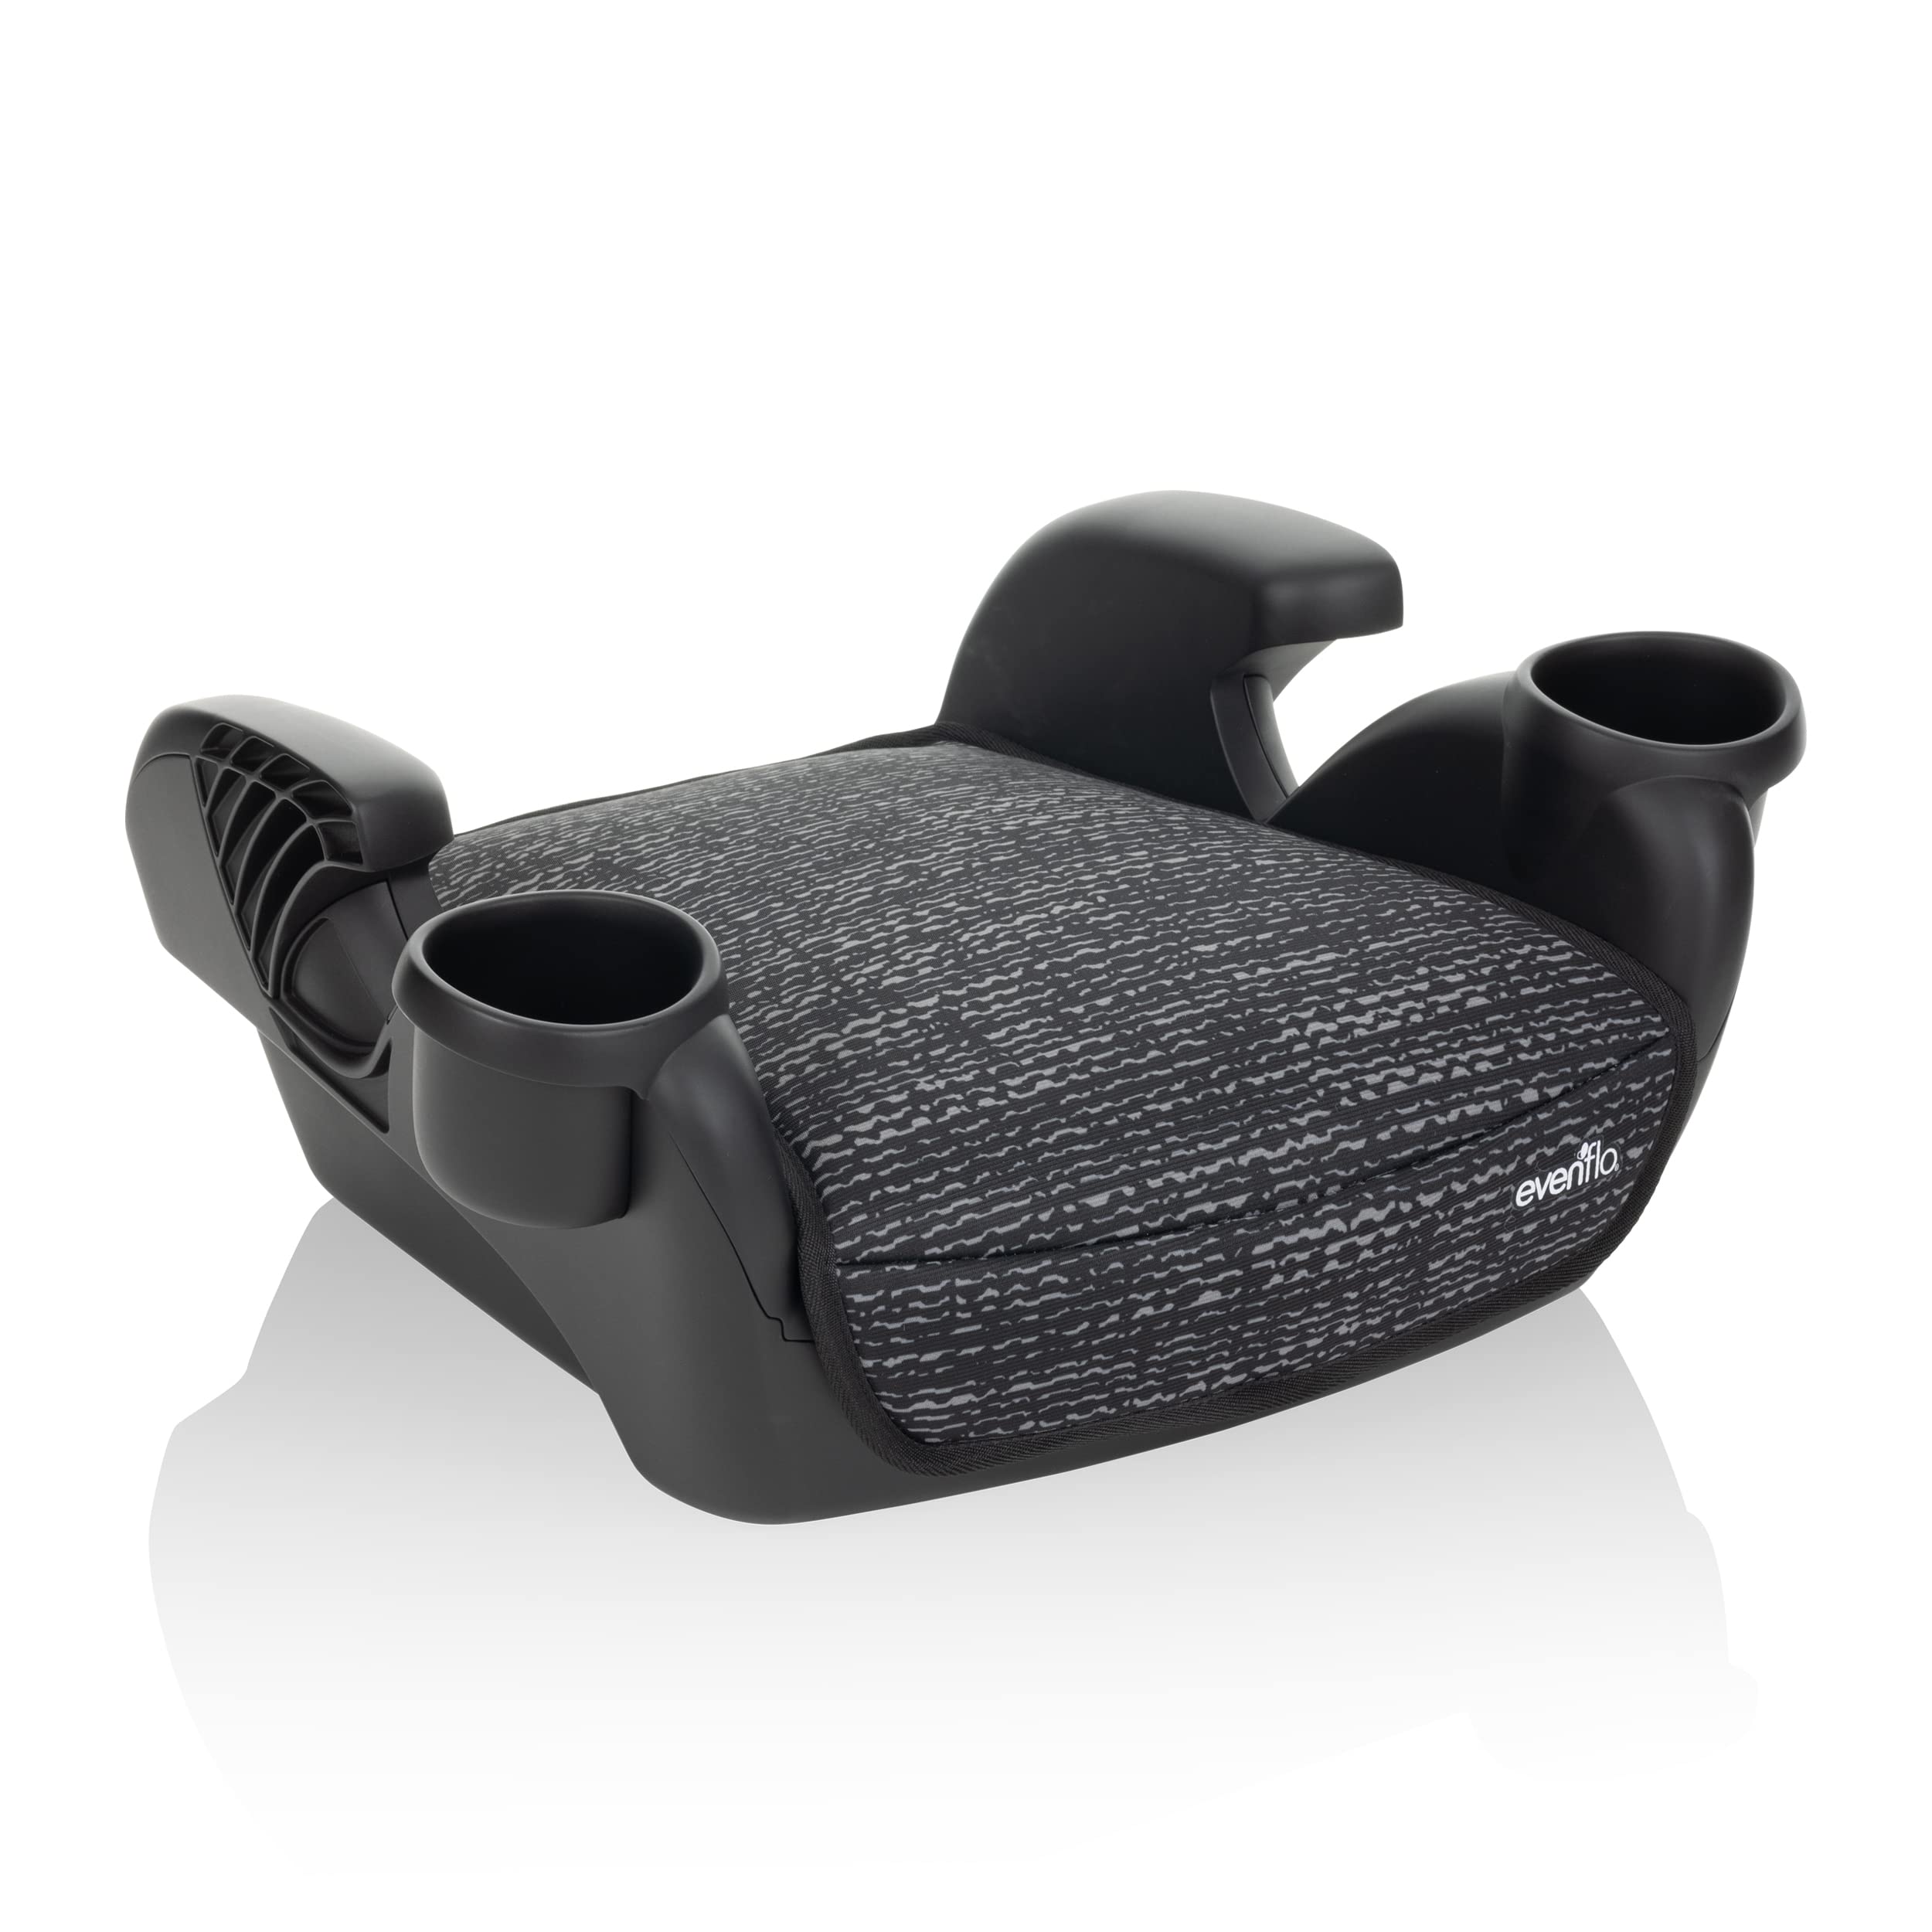 Evenflo GoTime No Back Booster Car Seat (Static Black) (Pack of 2)